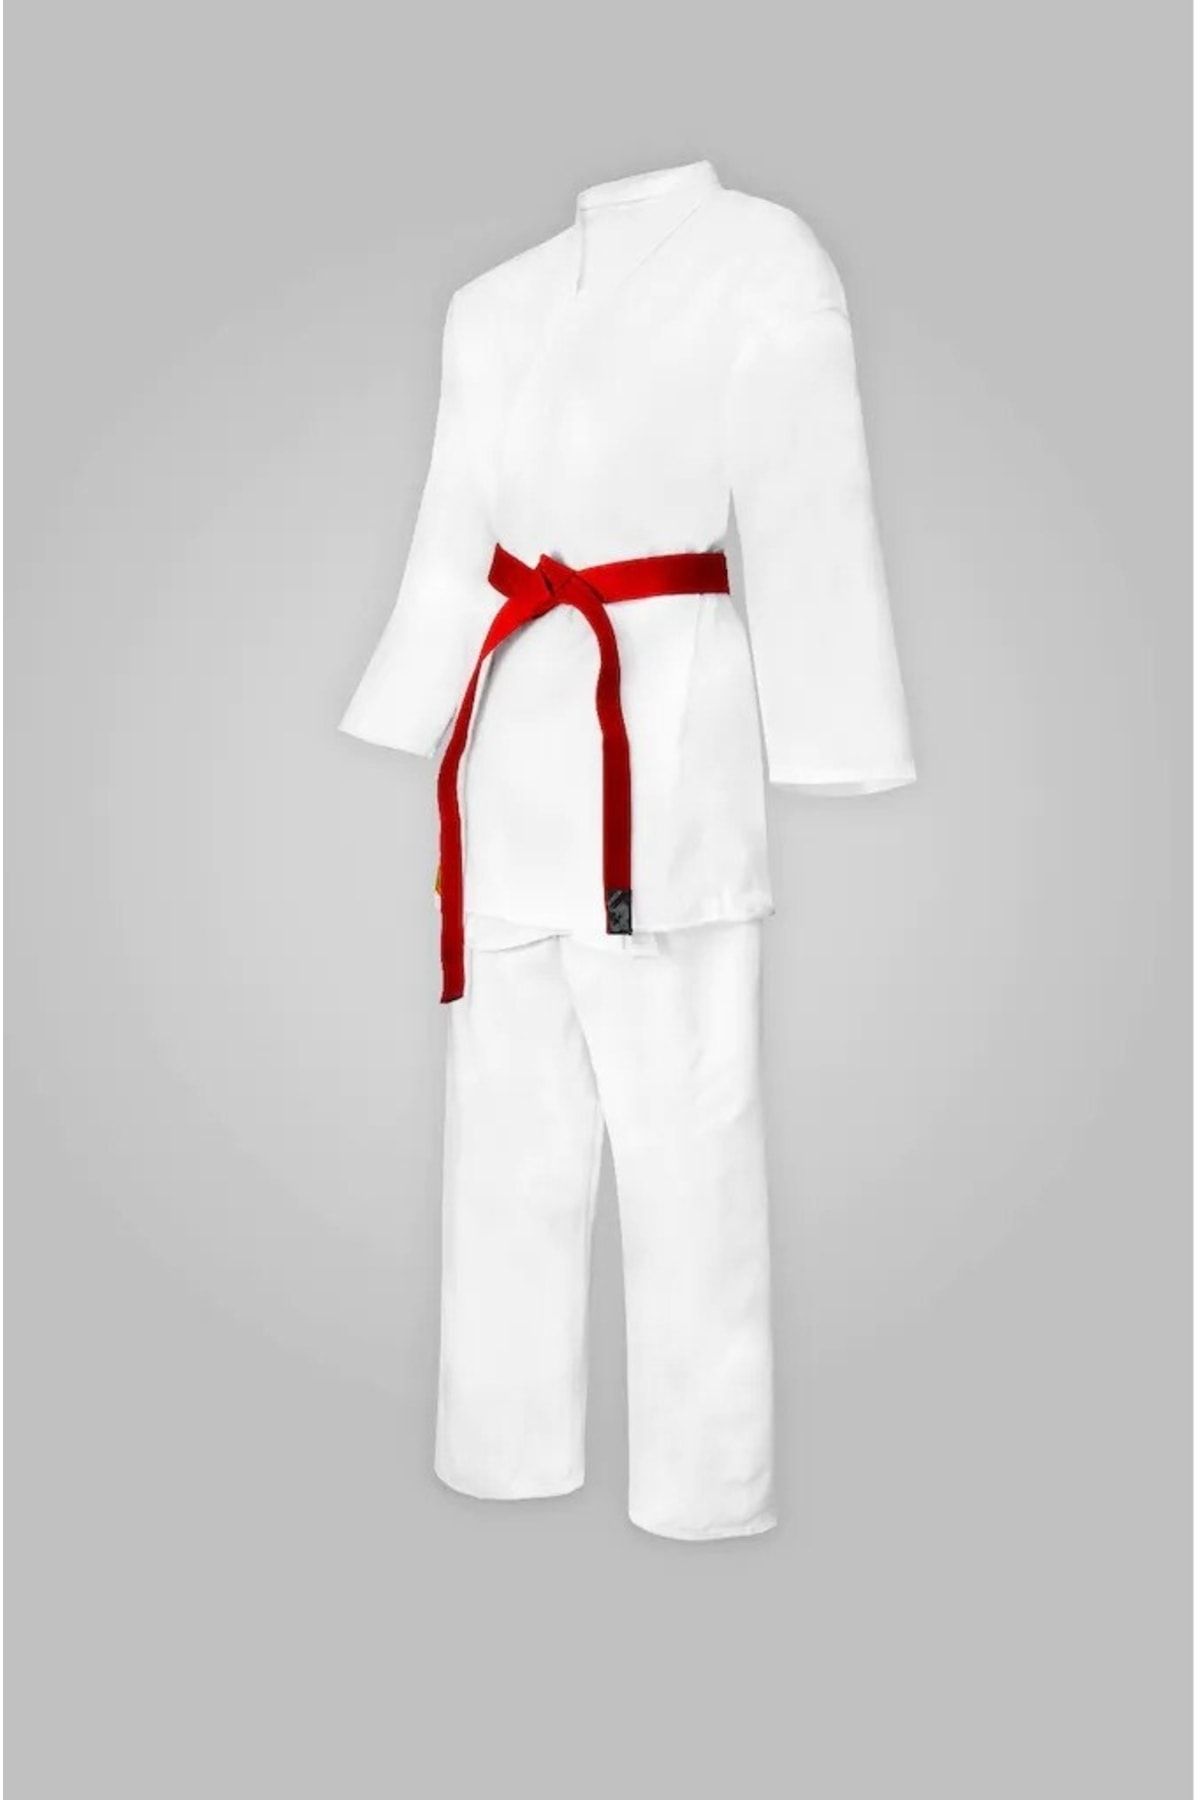 Saydo Karate Kumite Elbisesi